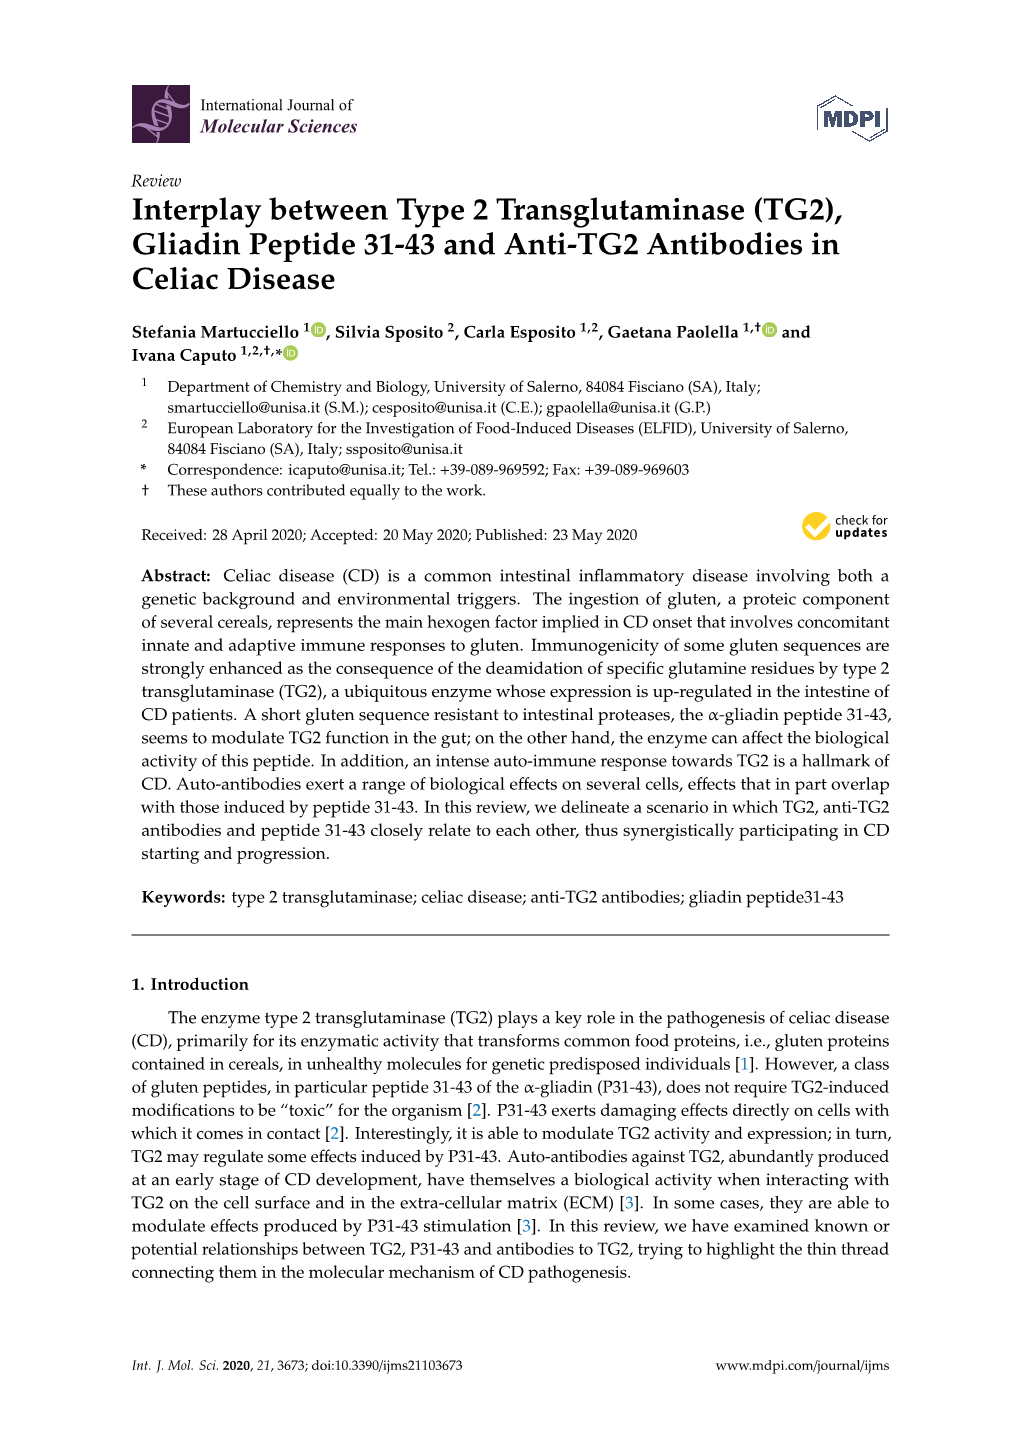 TG2), Gliadin Peptide 31-43 and Anti-TG2 Antibodies in Celiac Disease